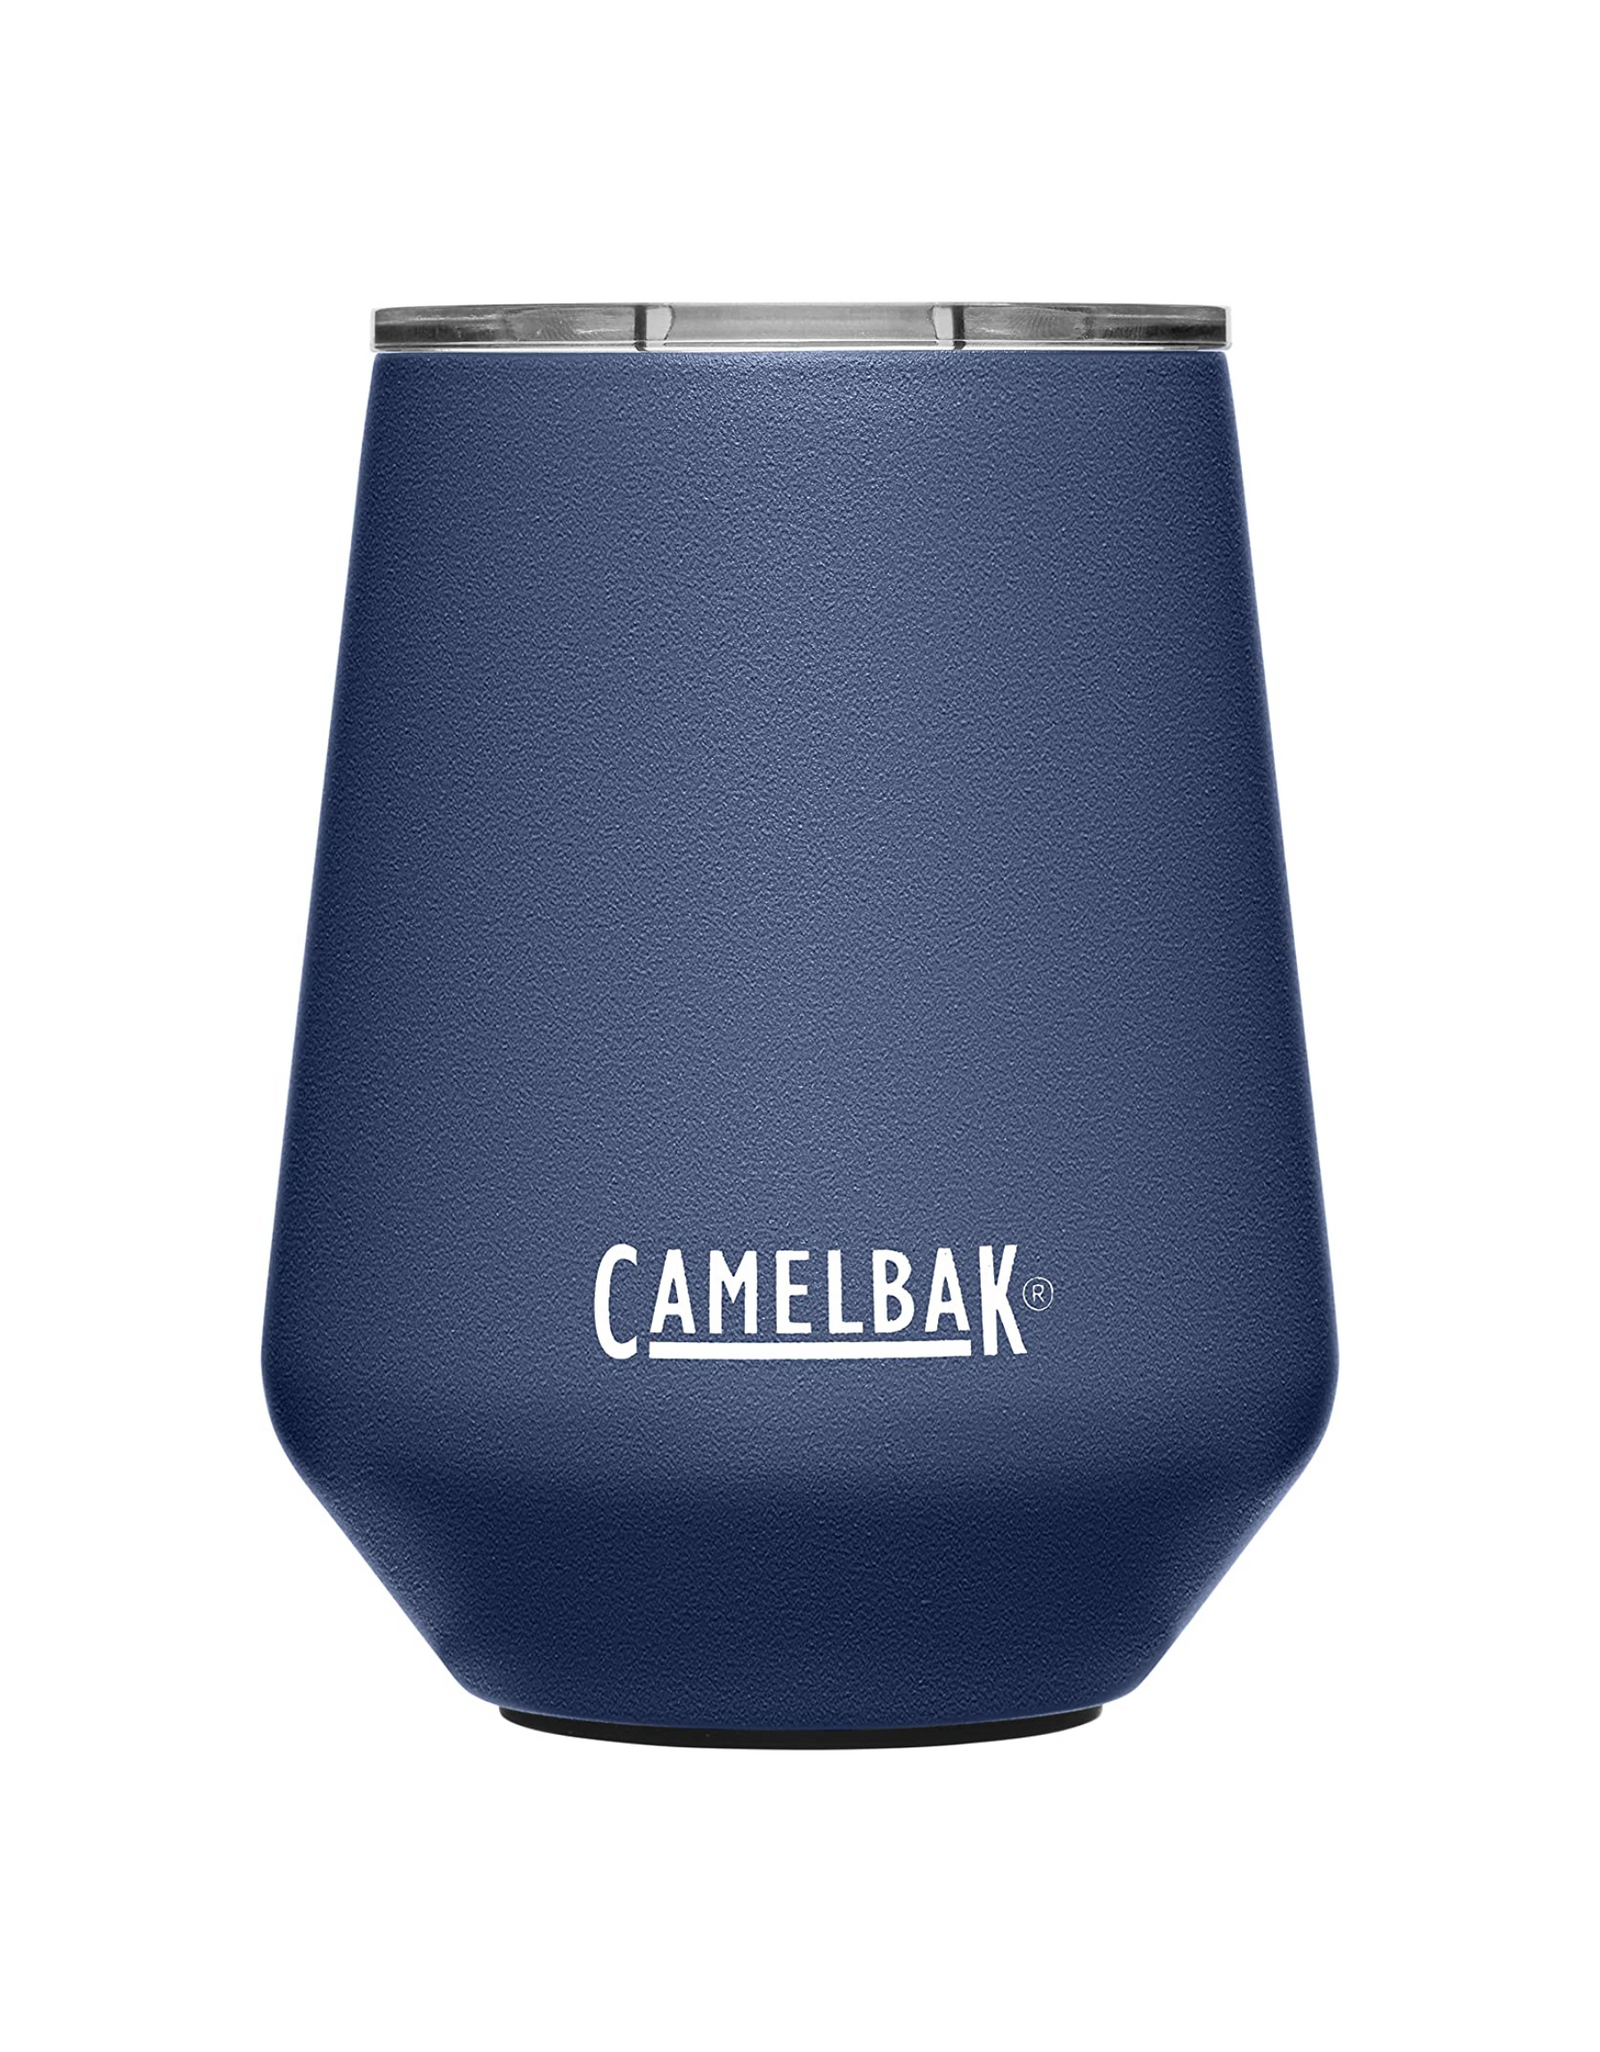 CamelBak Horizon 12 oz Wine Tumbler, Tri-Mode Lid, Insulated Stainless Steel, Navy